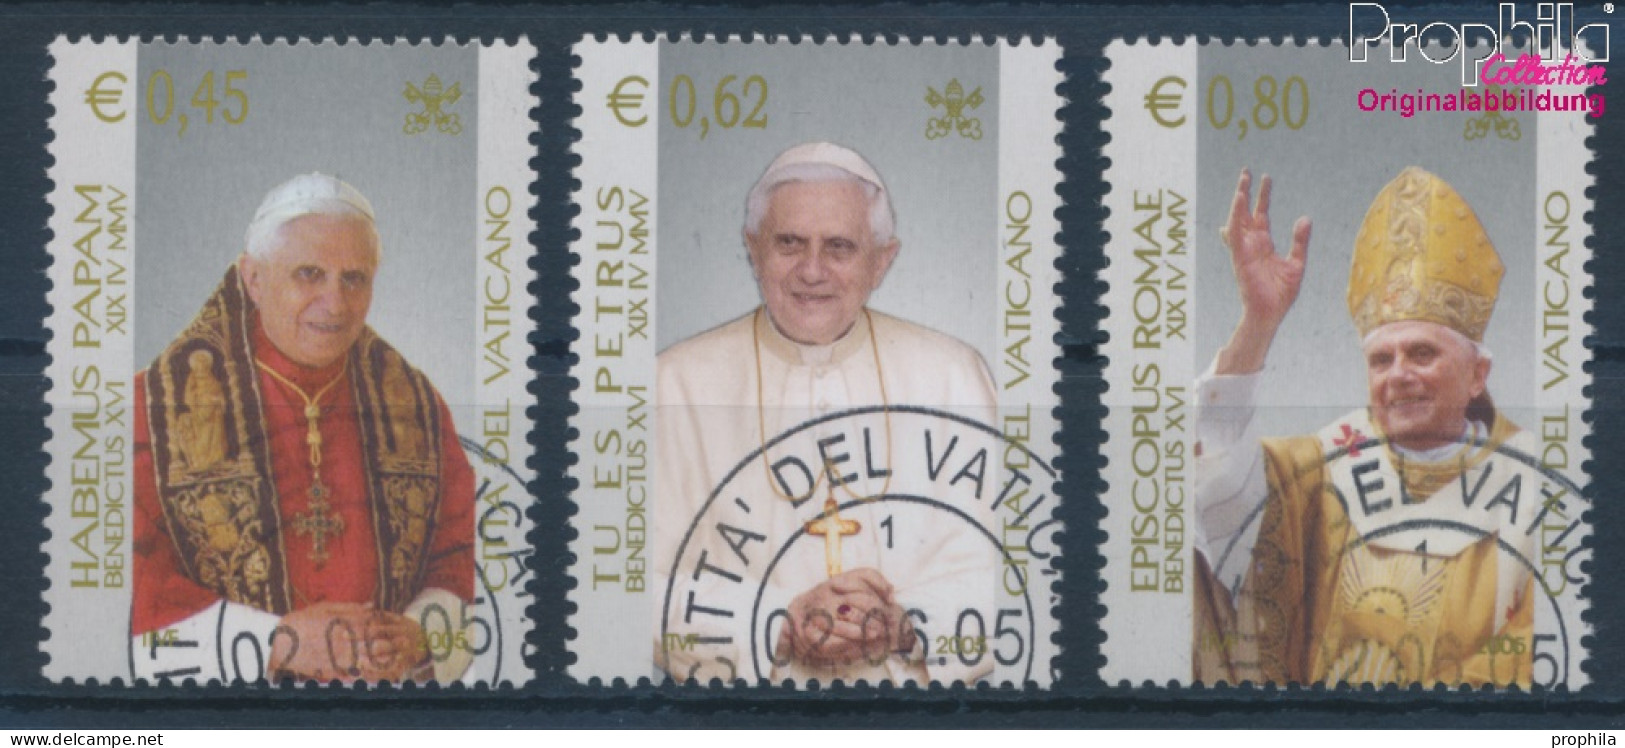 Vatikanstadt 1517-1519 (kompl.Ausg.) Gestempelt 2005 Papst Benedikt XVI. (10352363 - Oblitérés